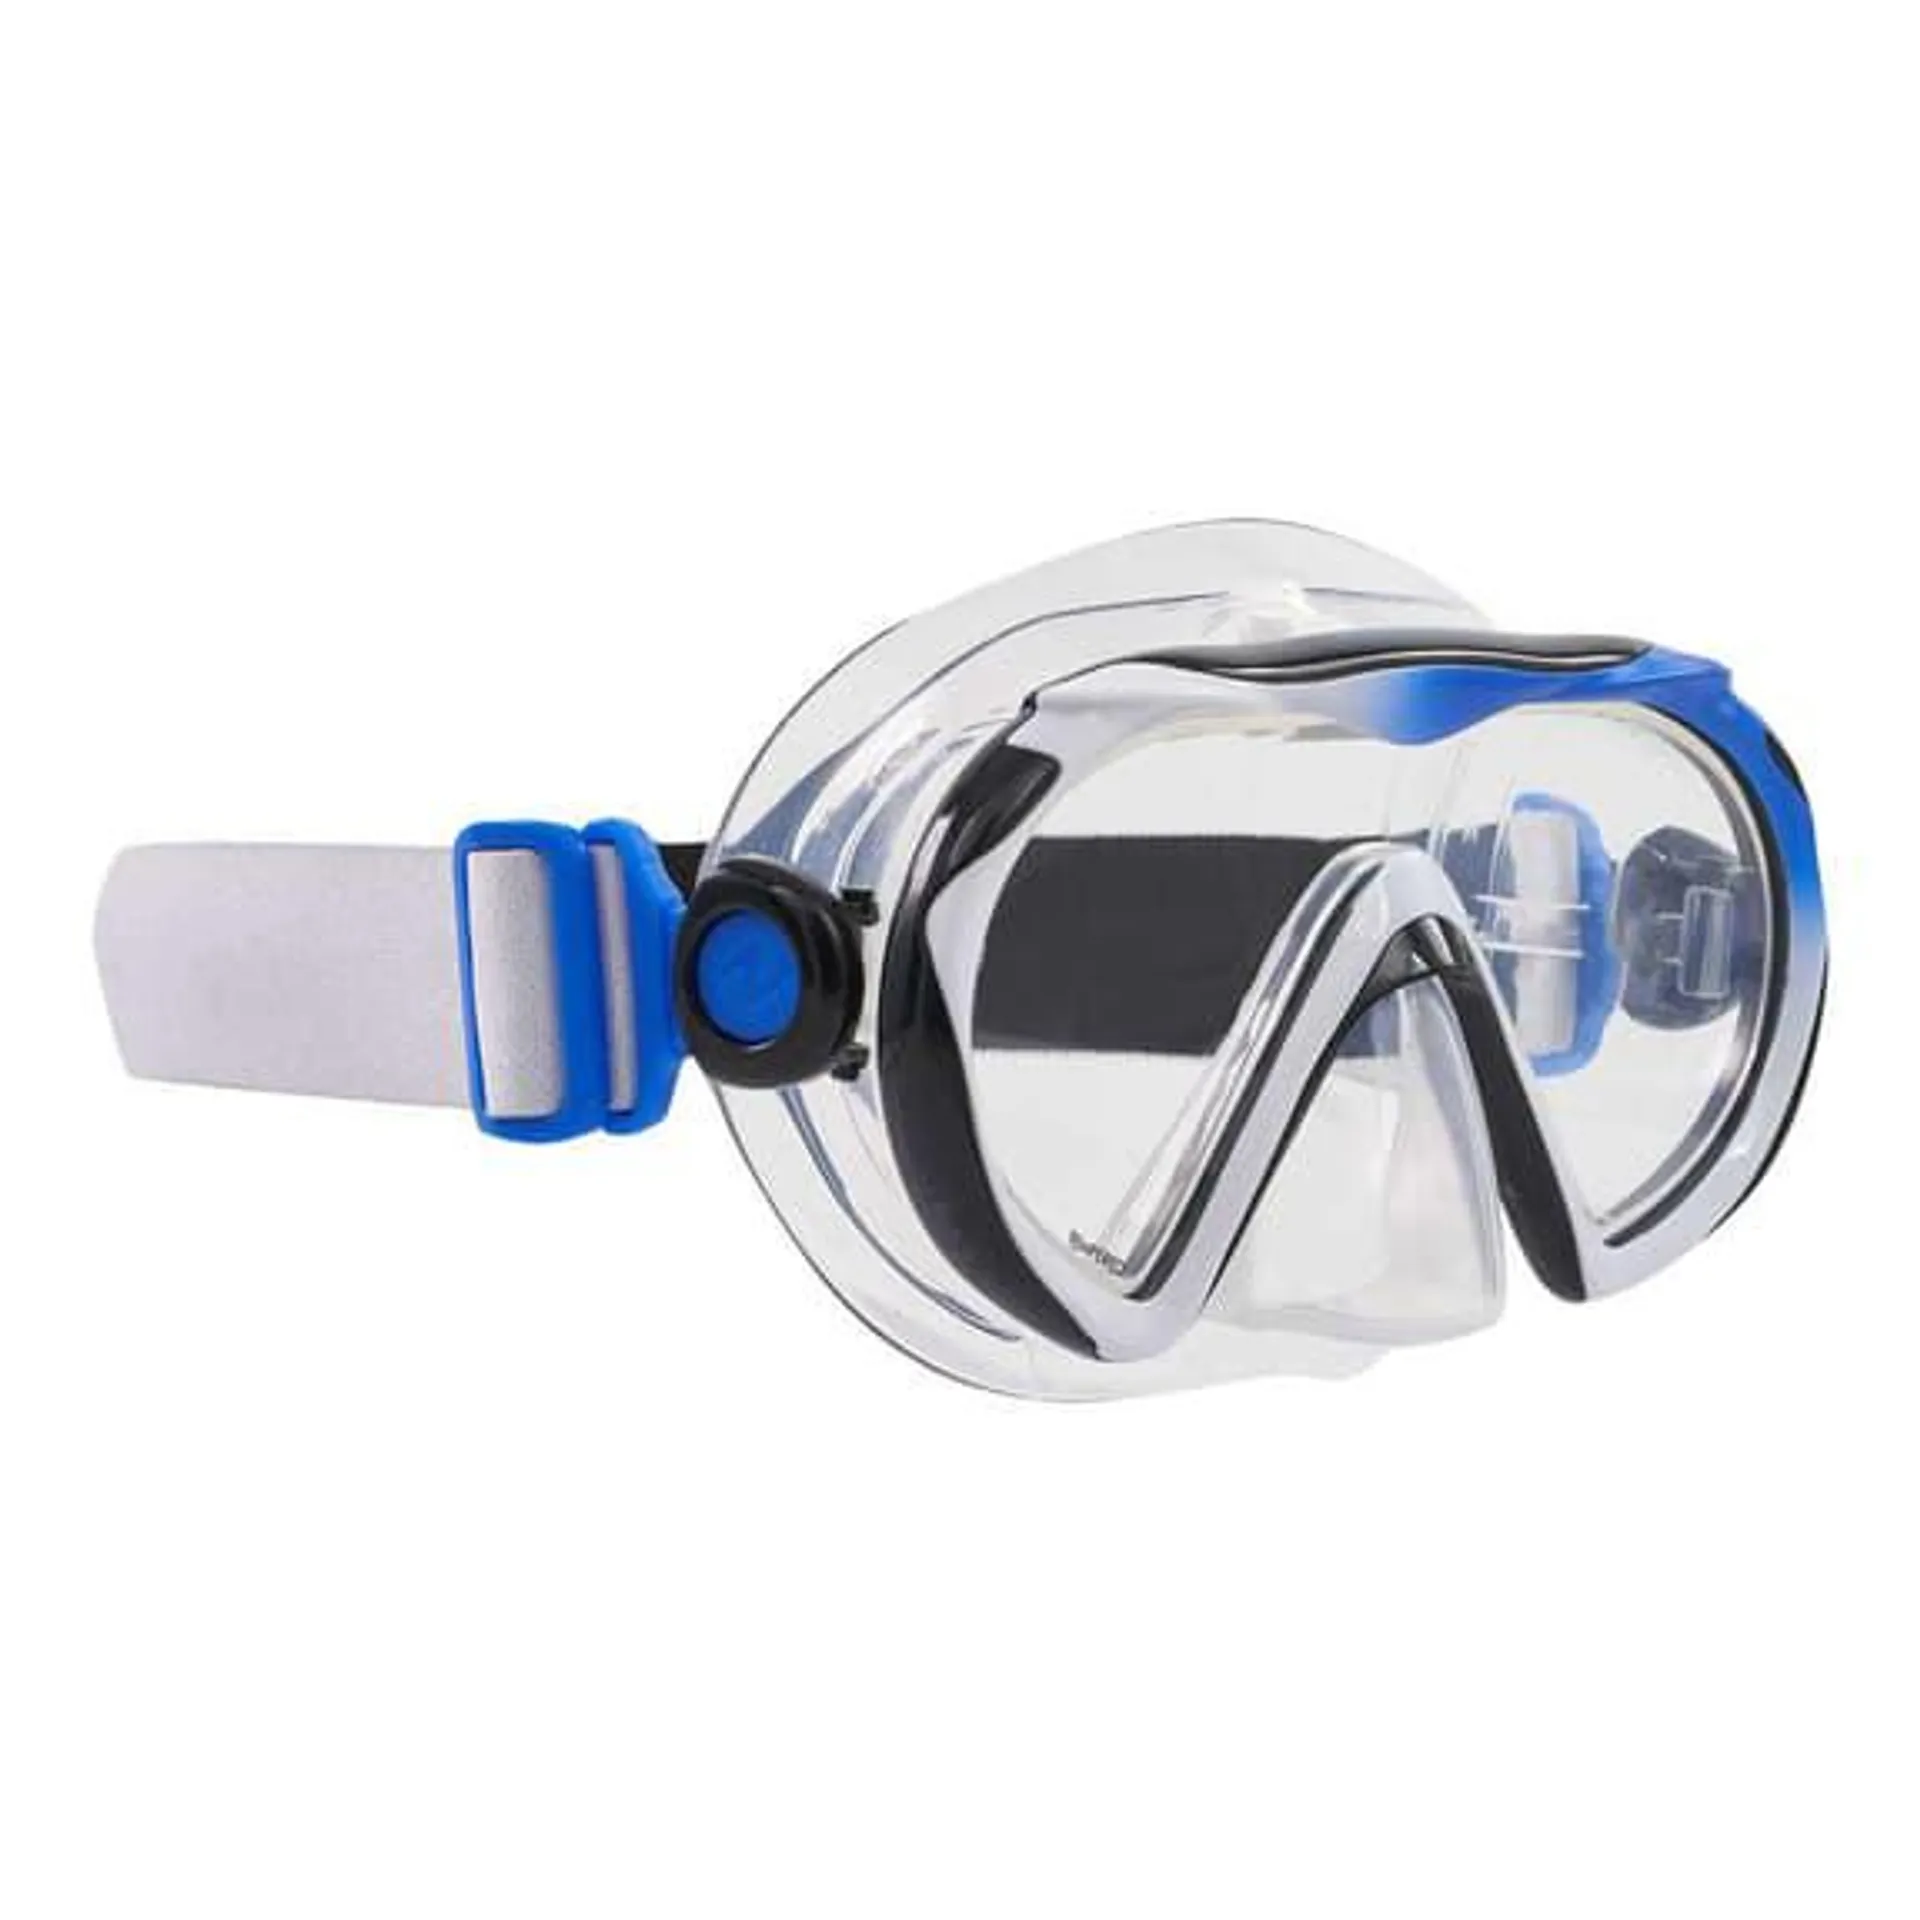 Lunettes de natation Aqua Lung Compass bleu noir avec verres transparents